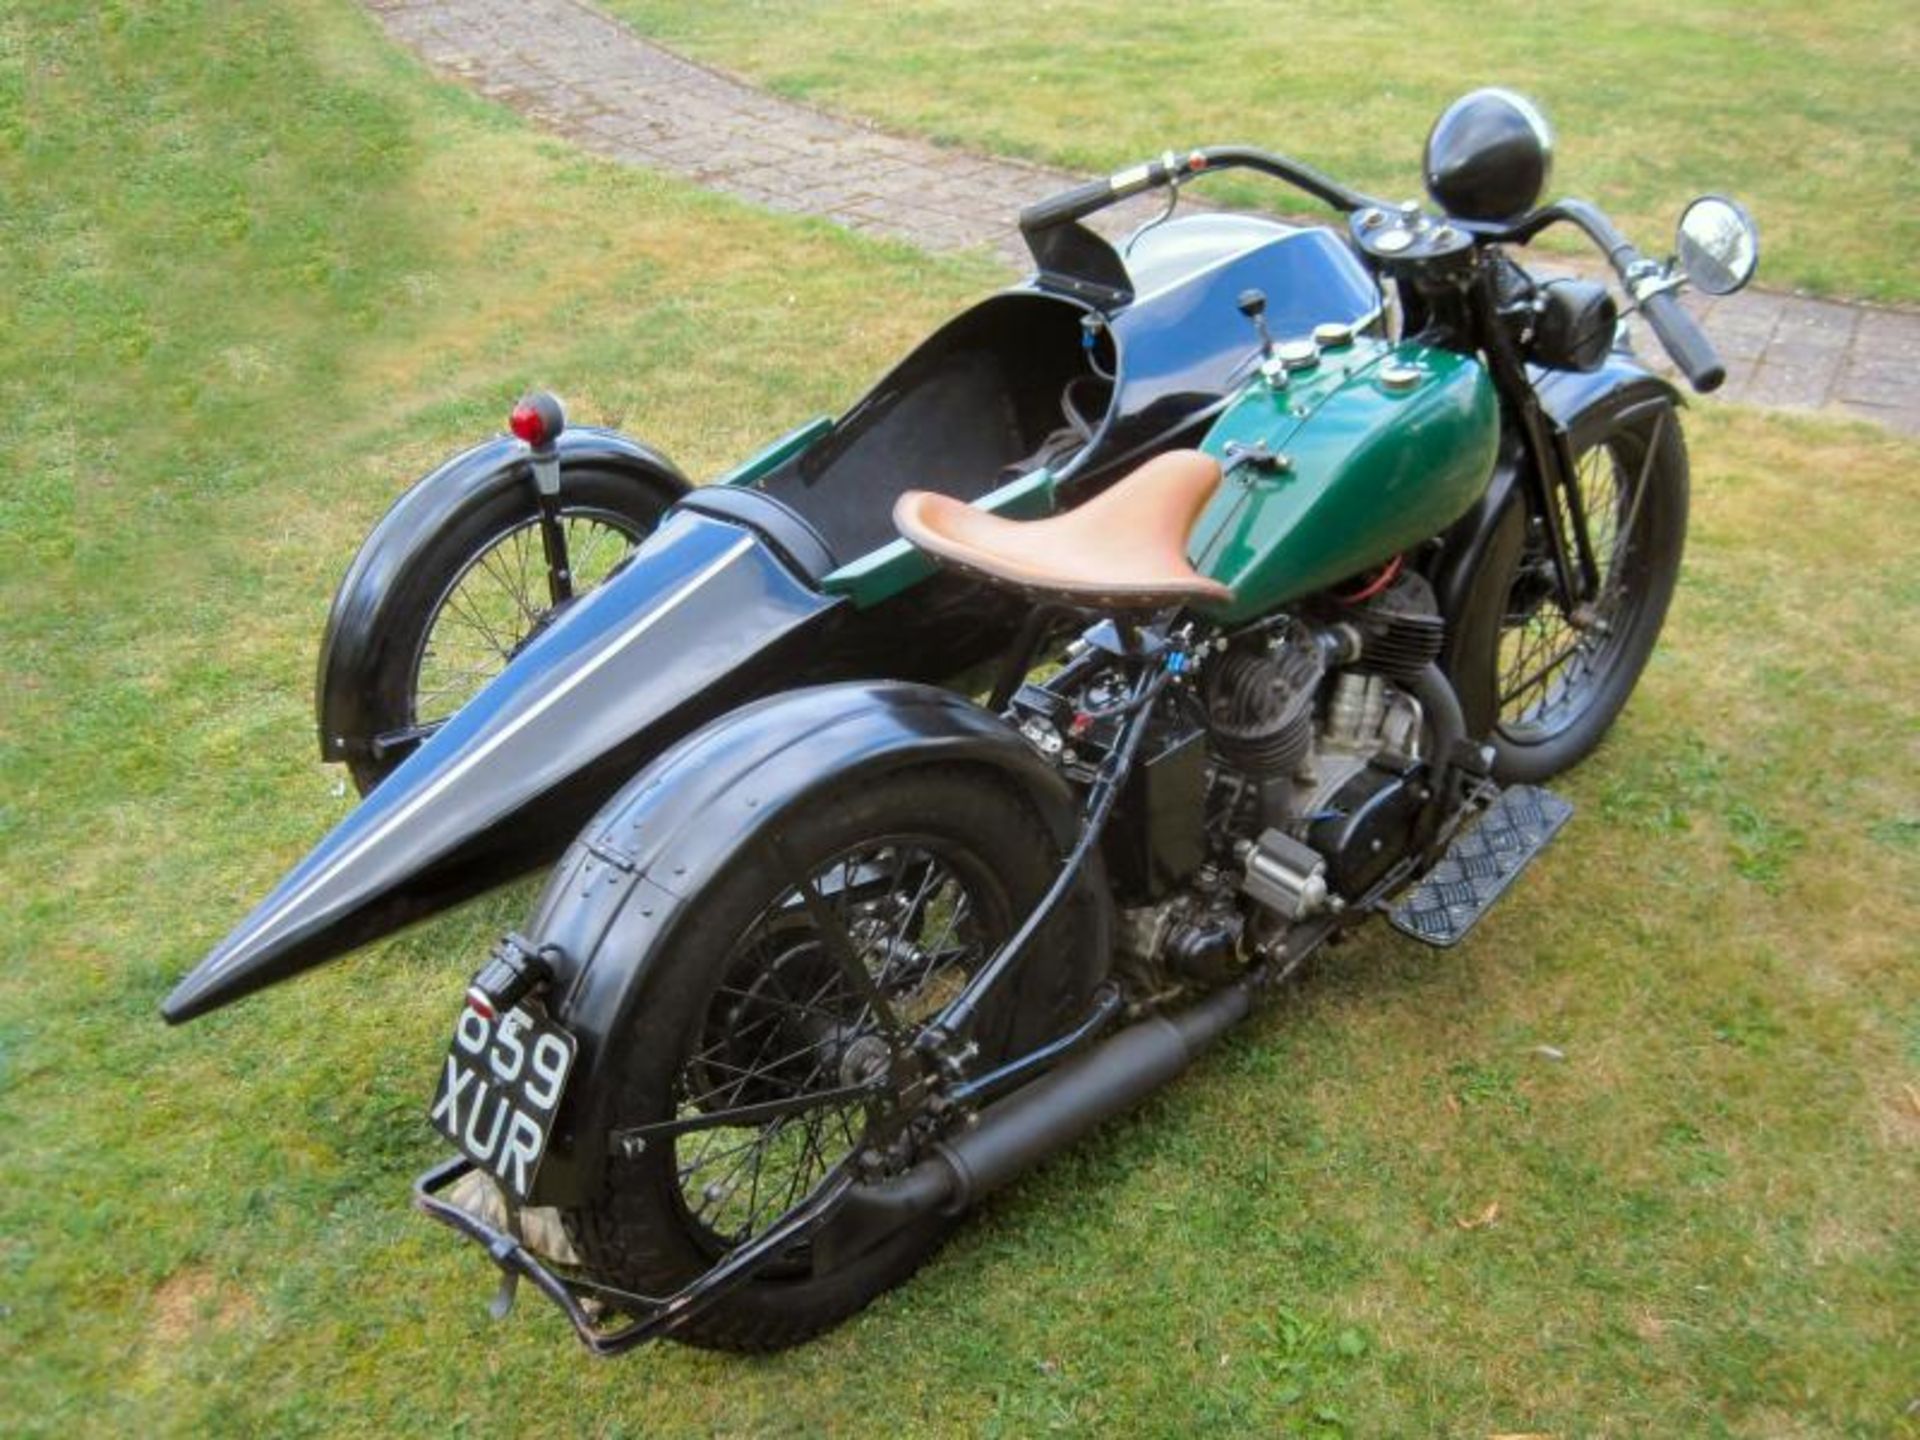 1931 1200cc Harley Davidson VL / Swallow outfit Reg. No. 859 UXR Frame No. 31VL3684 Engine No.